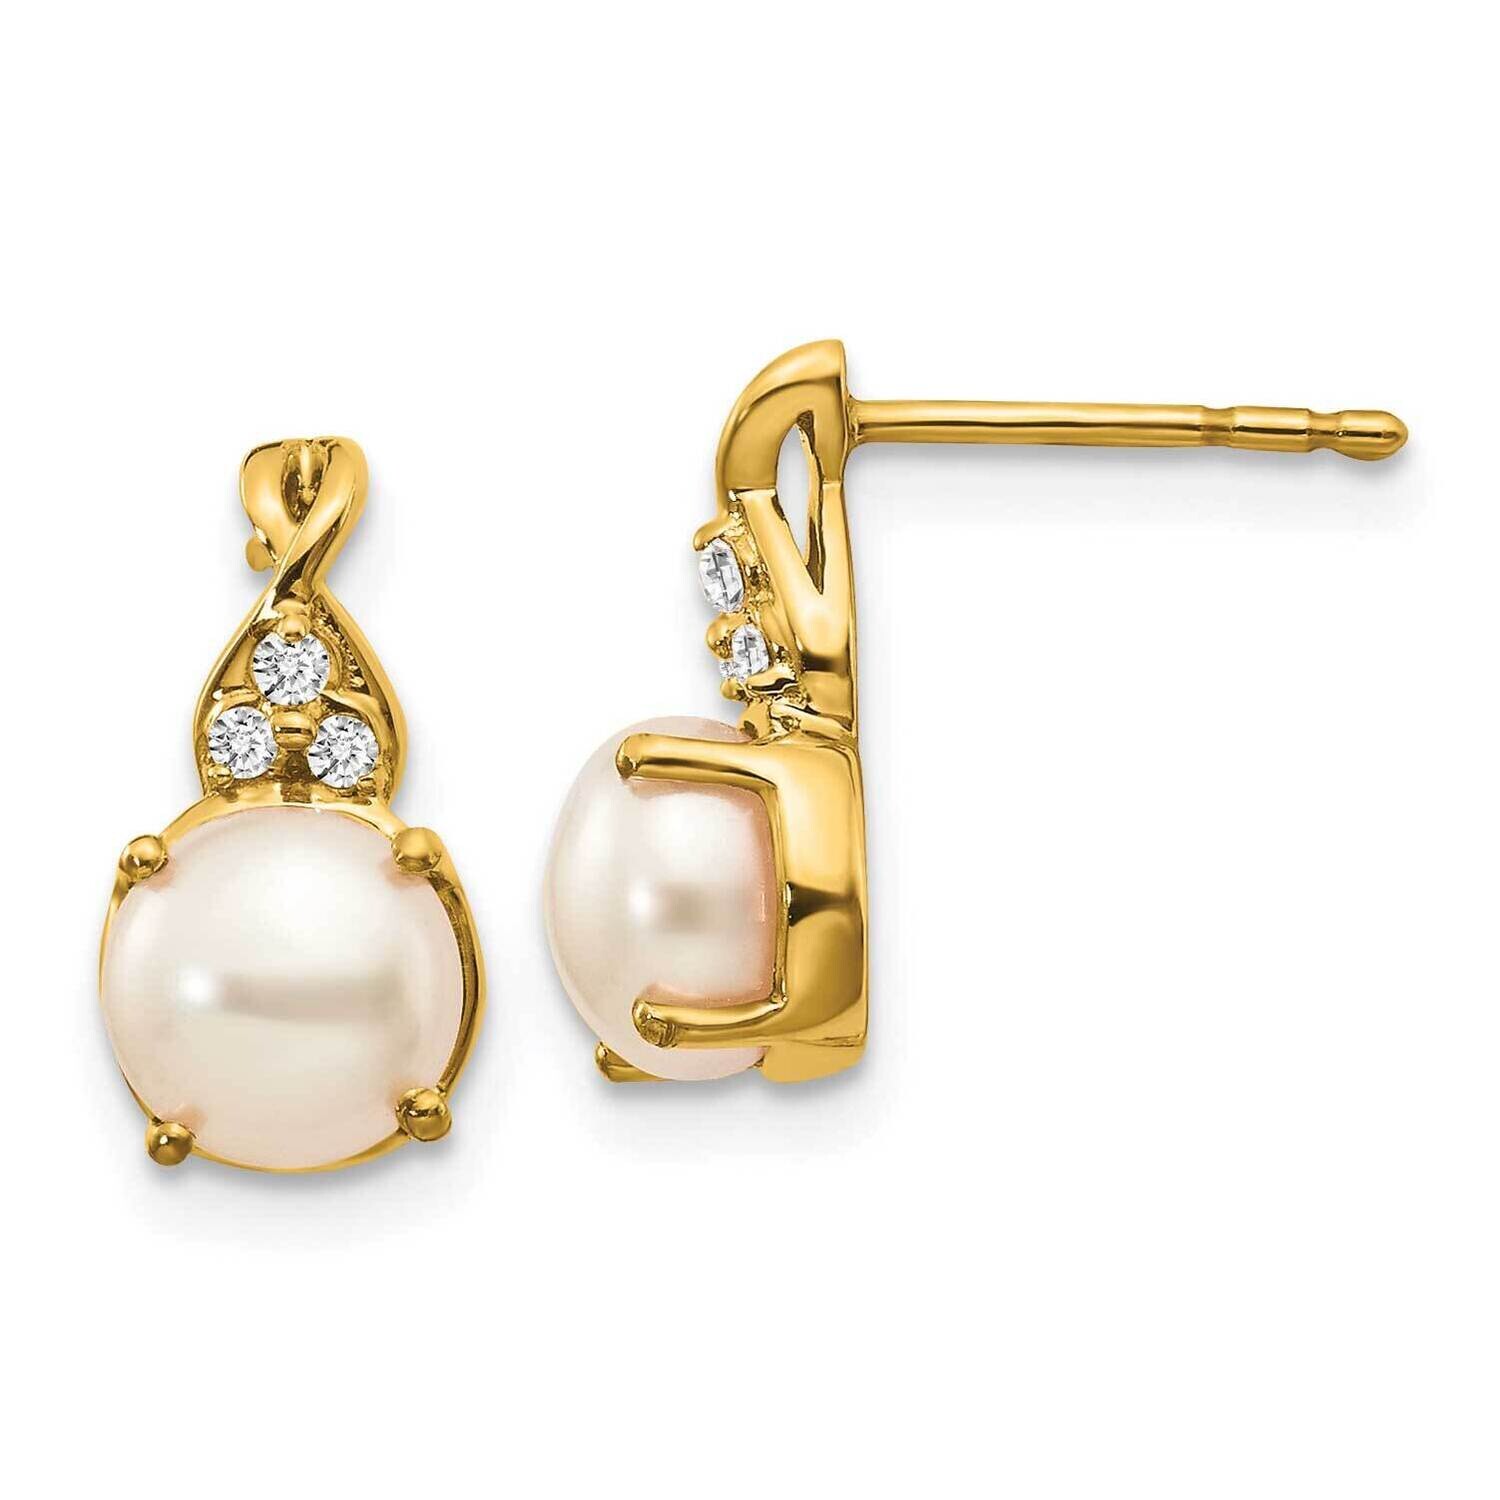 Fwc Pearl Diamond Earrings 14k Gold EM3625-PL-006-YA